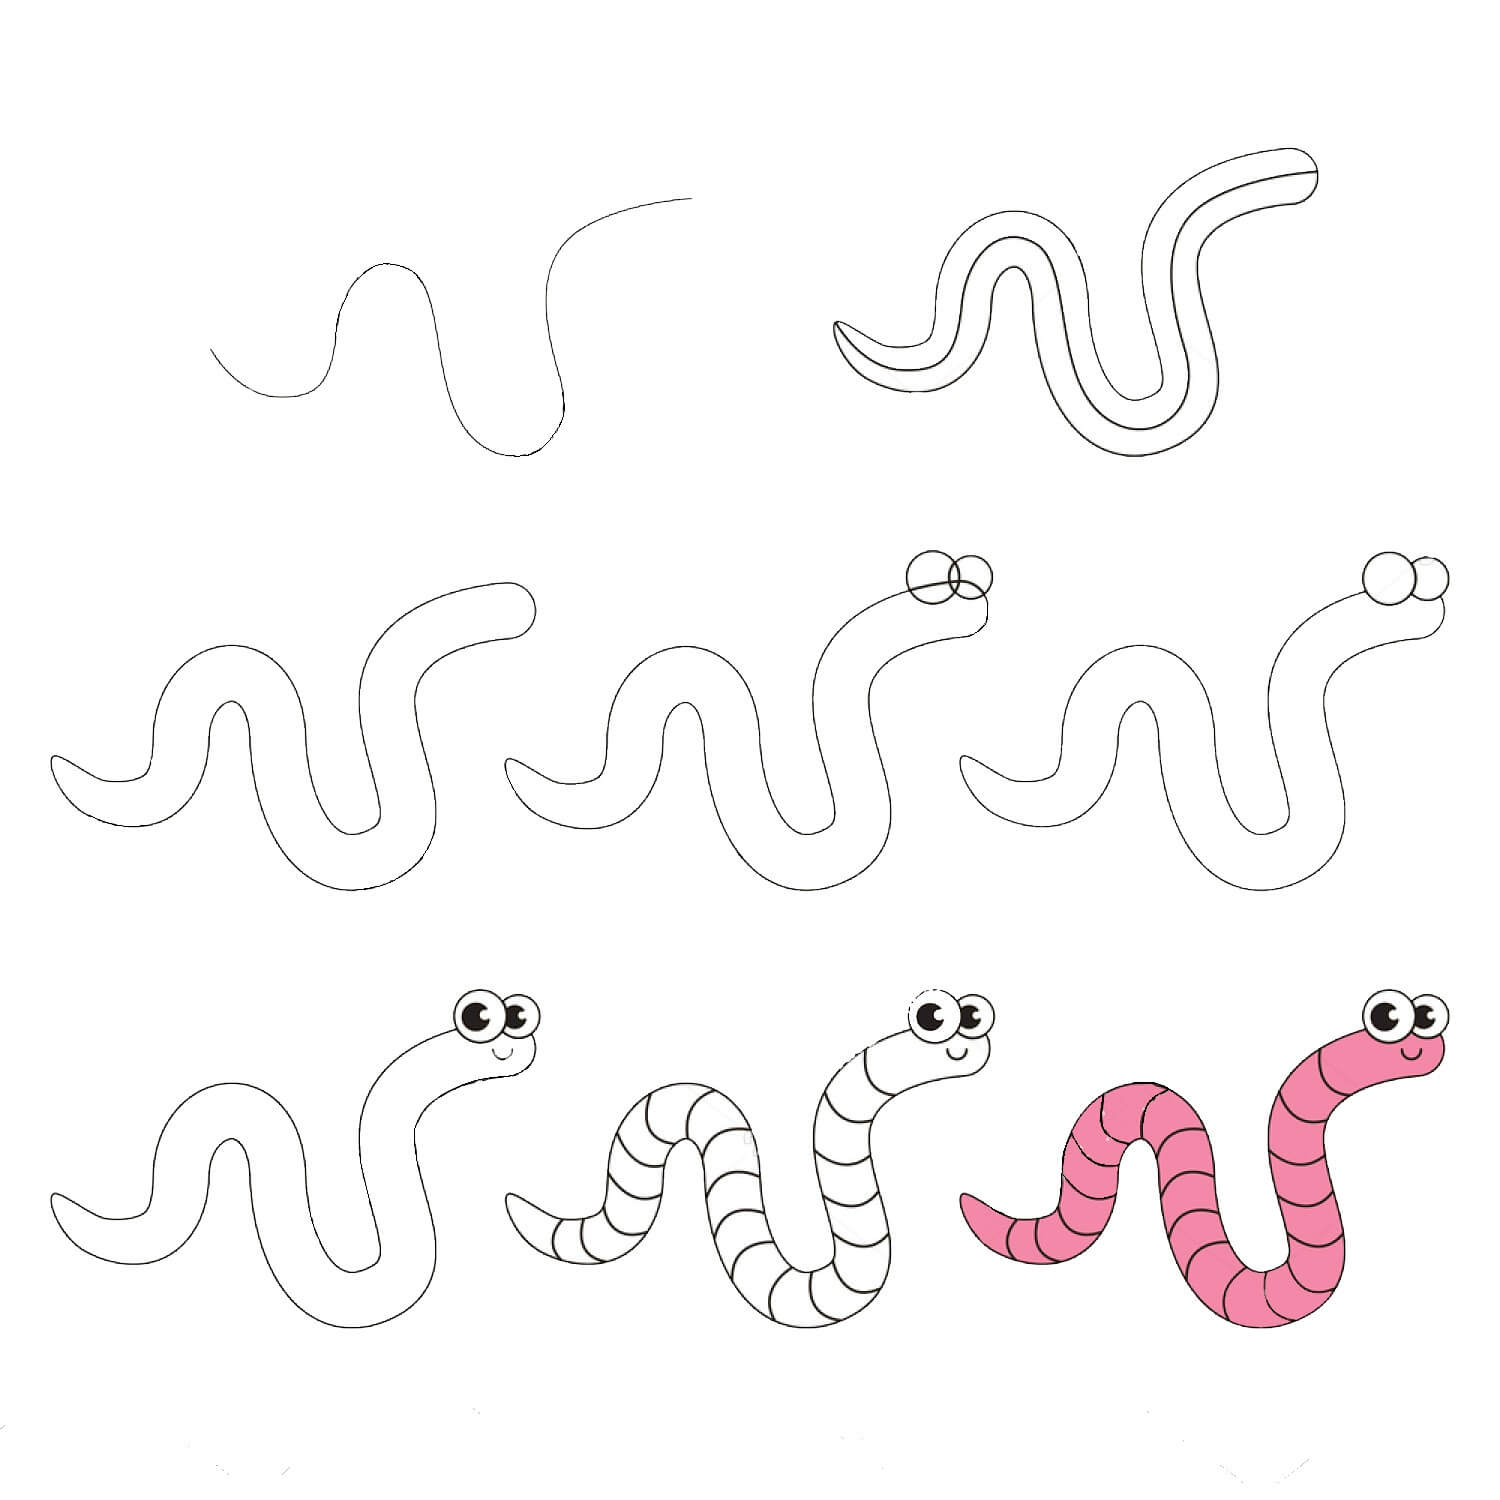 A worm idea (4) Drawing Ideas